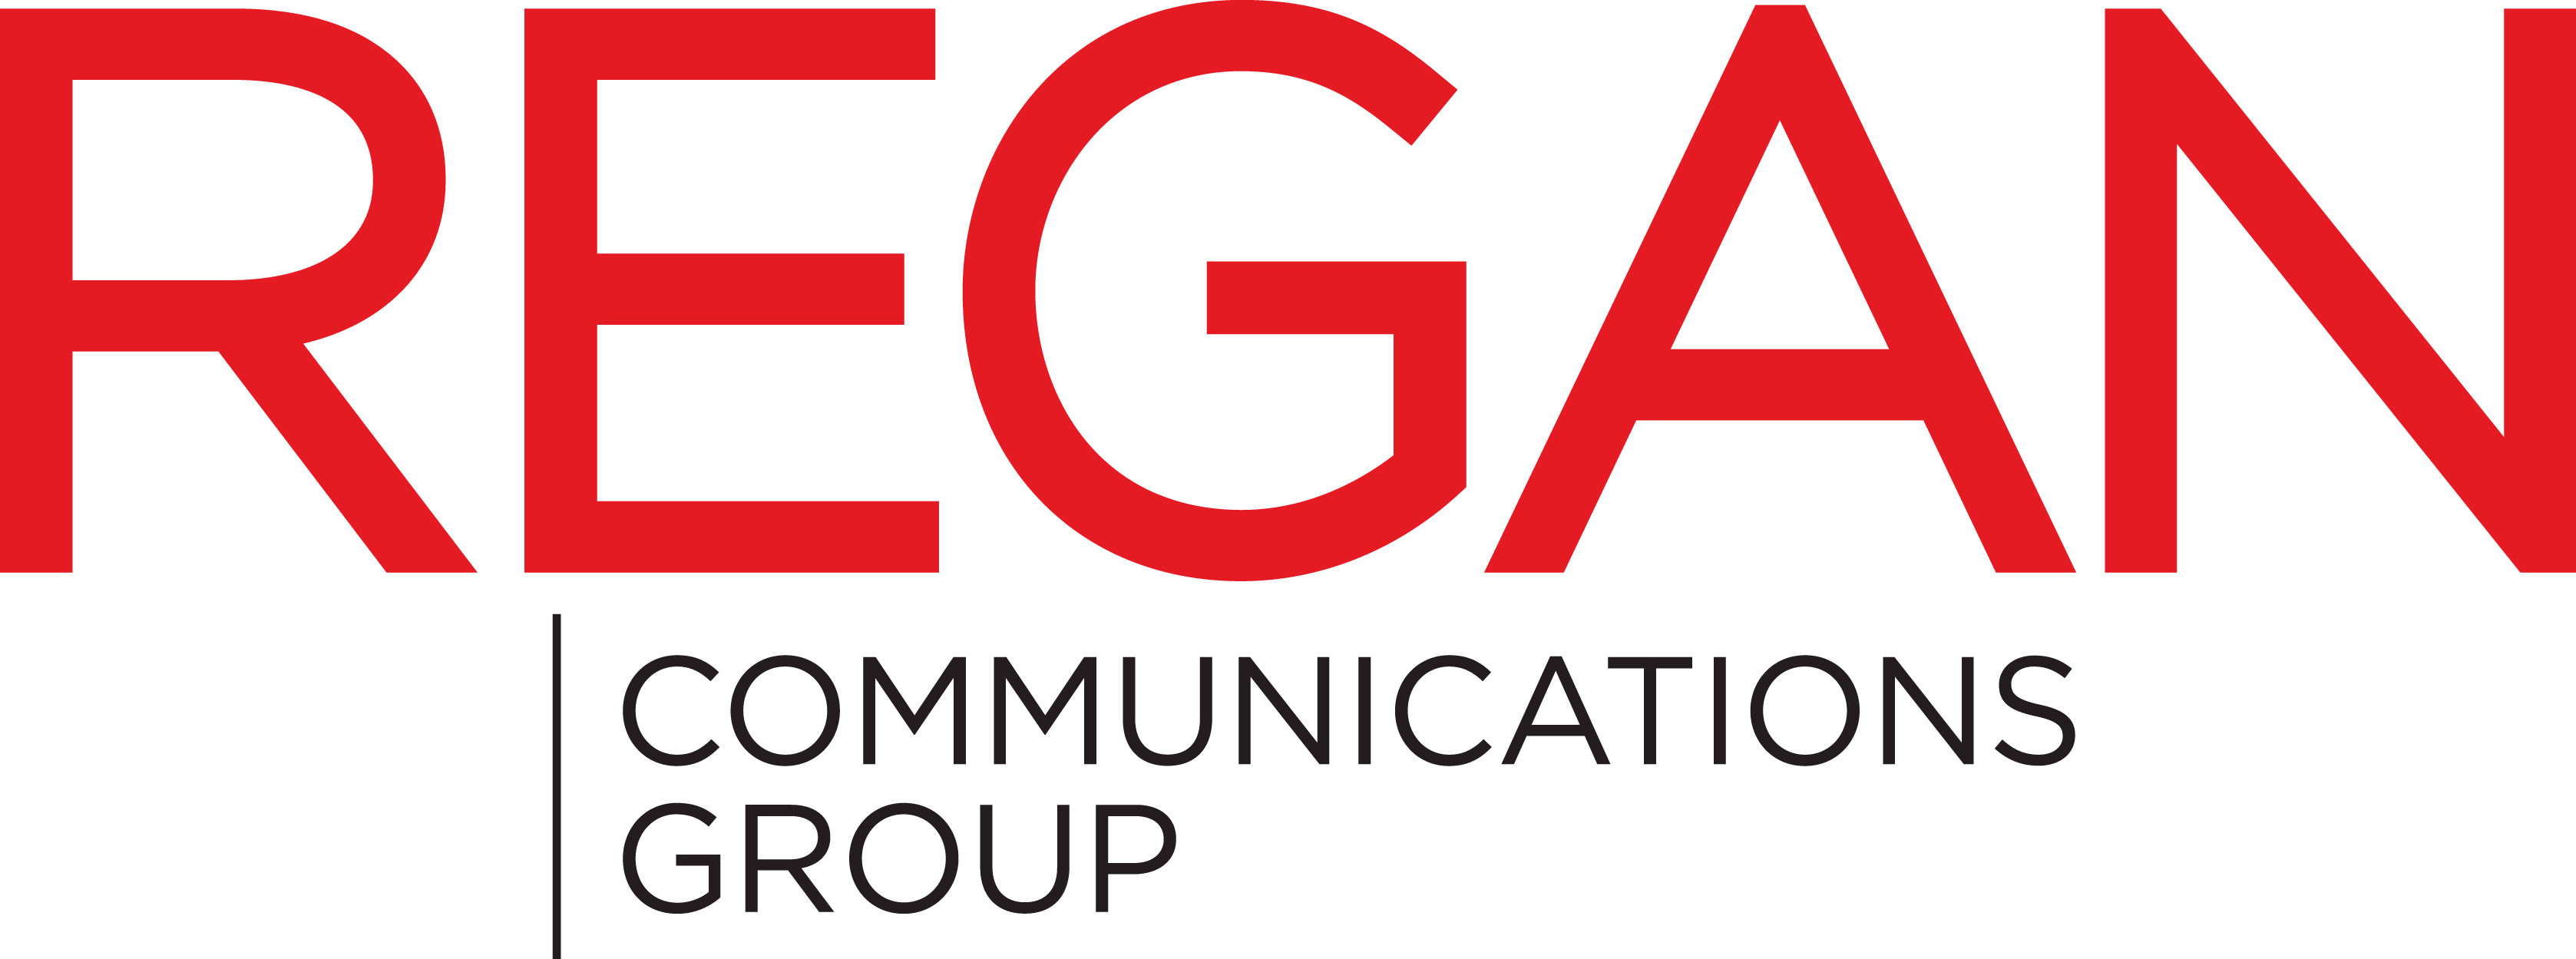  Top PR Company Logo: Regan Communications Group